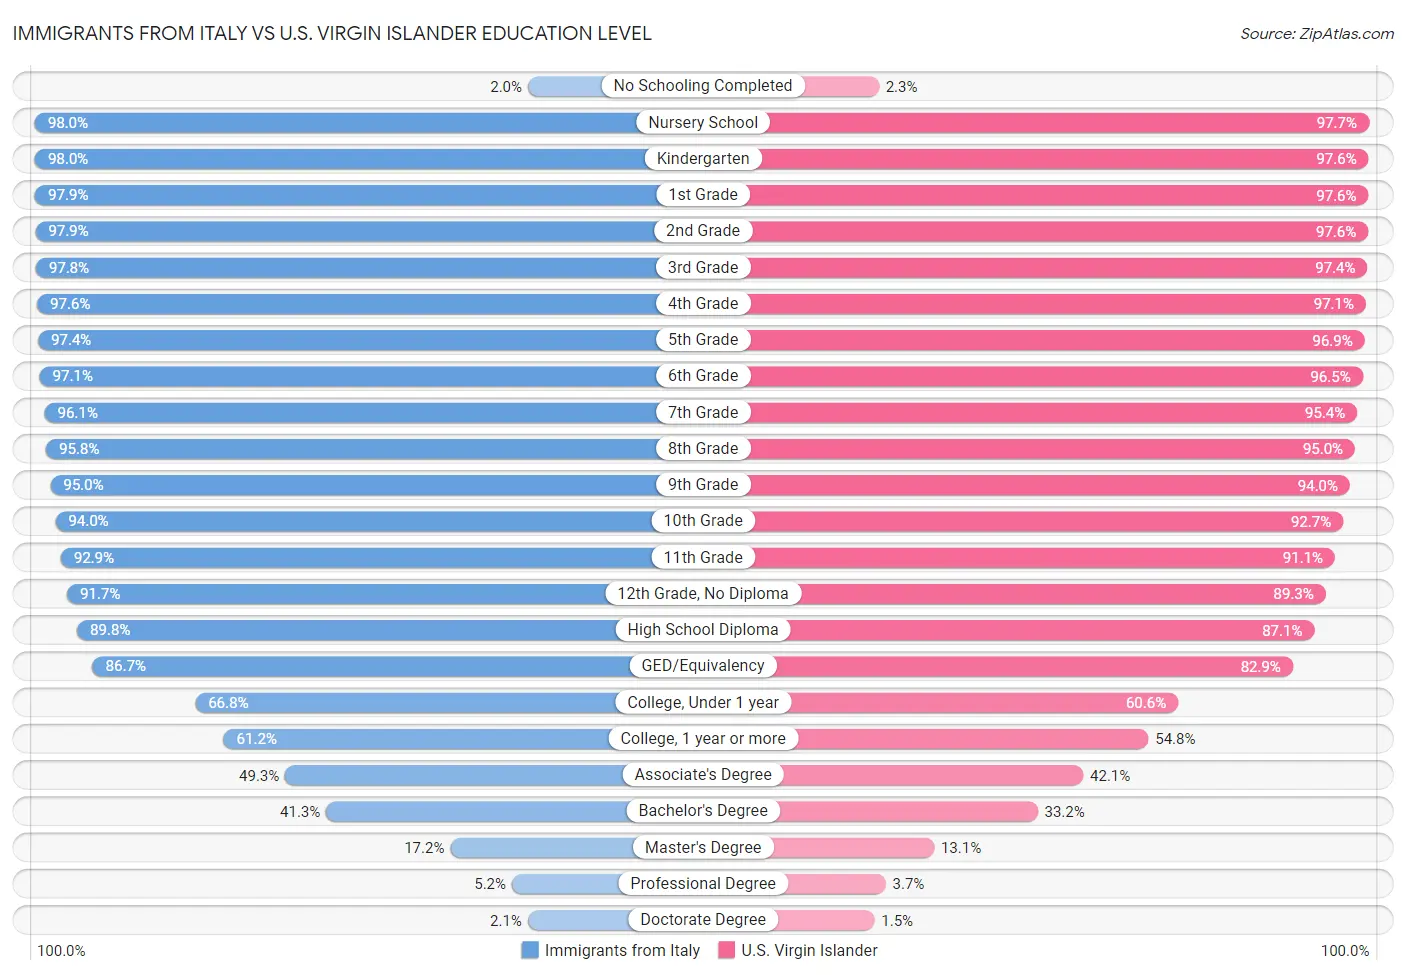 Immigrants from Italy vs U.S. Virgin Islander Education Level